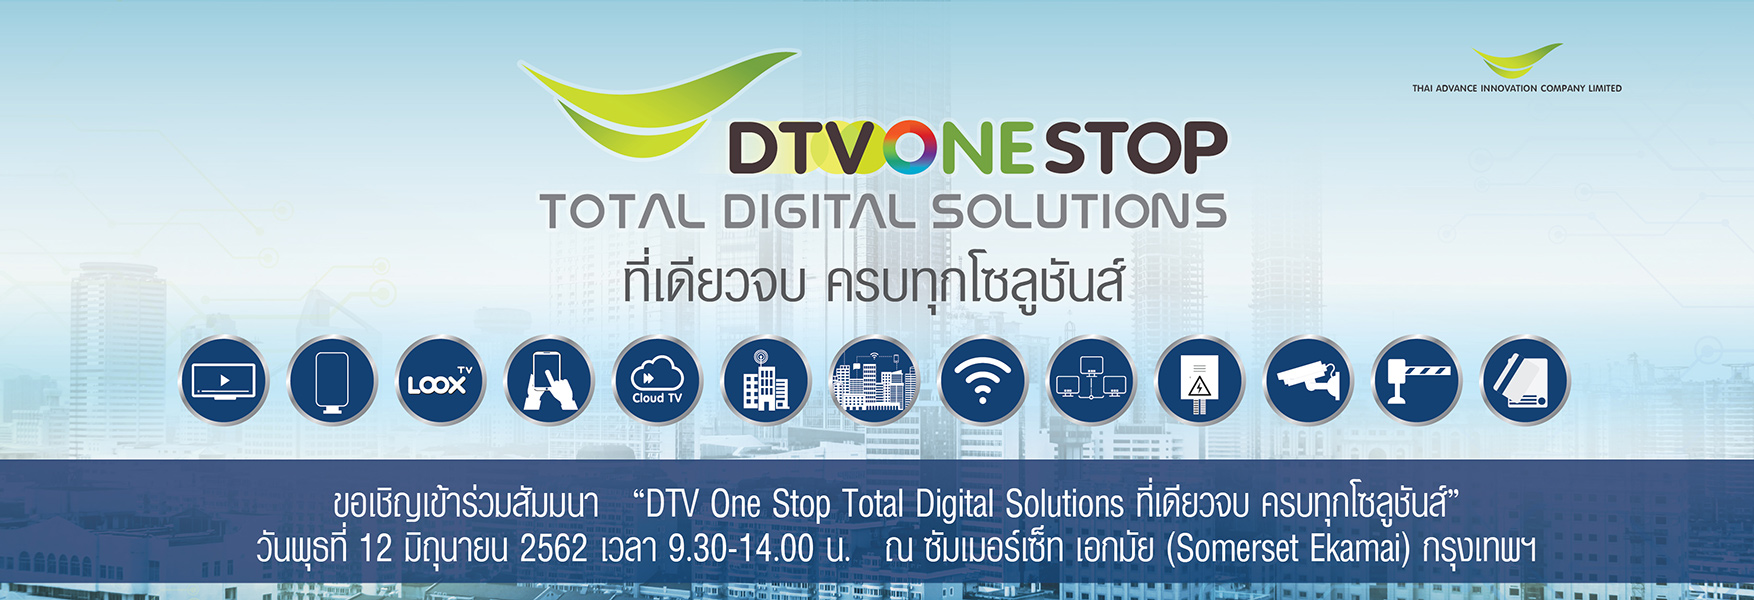 DTV ONE STOP Digital Solution